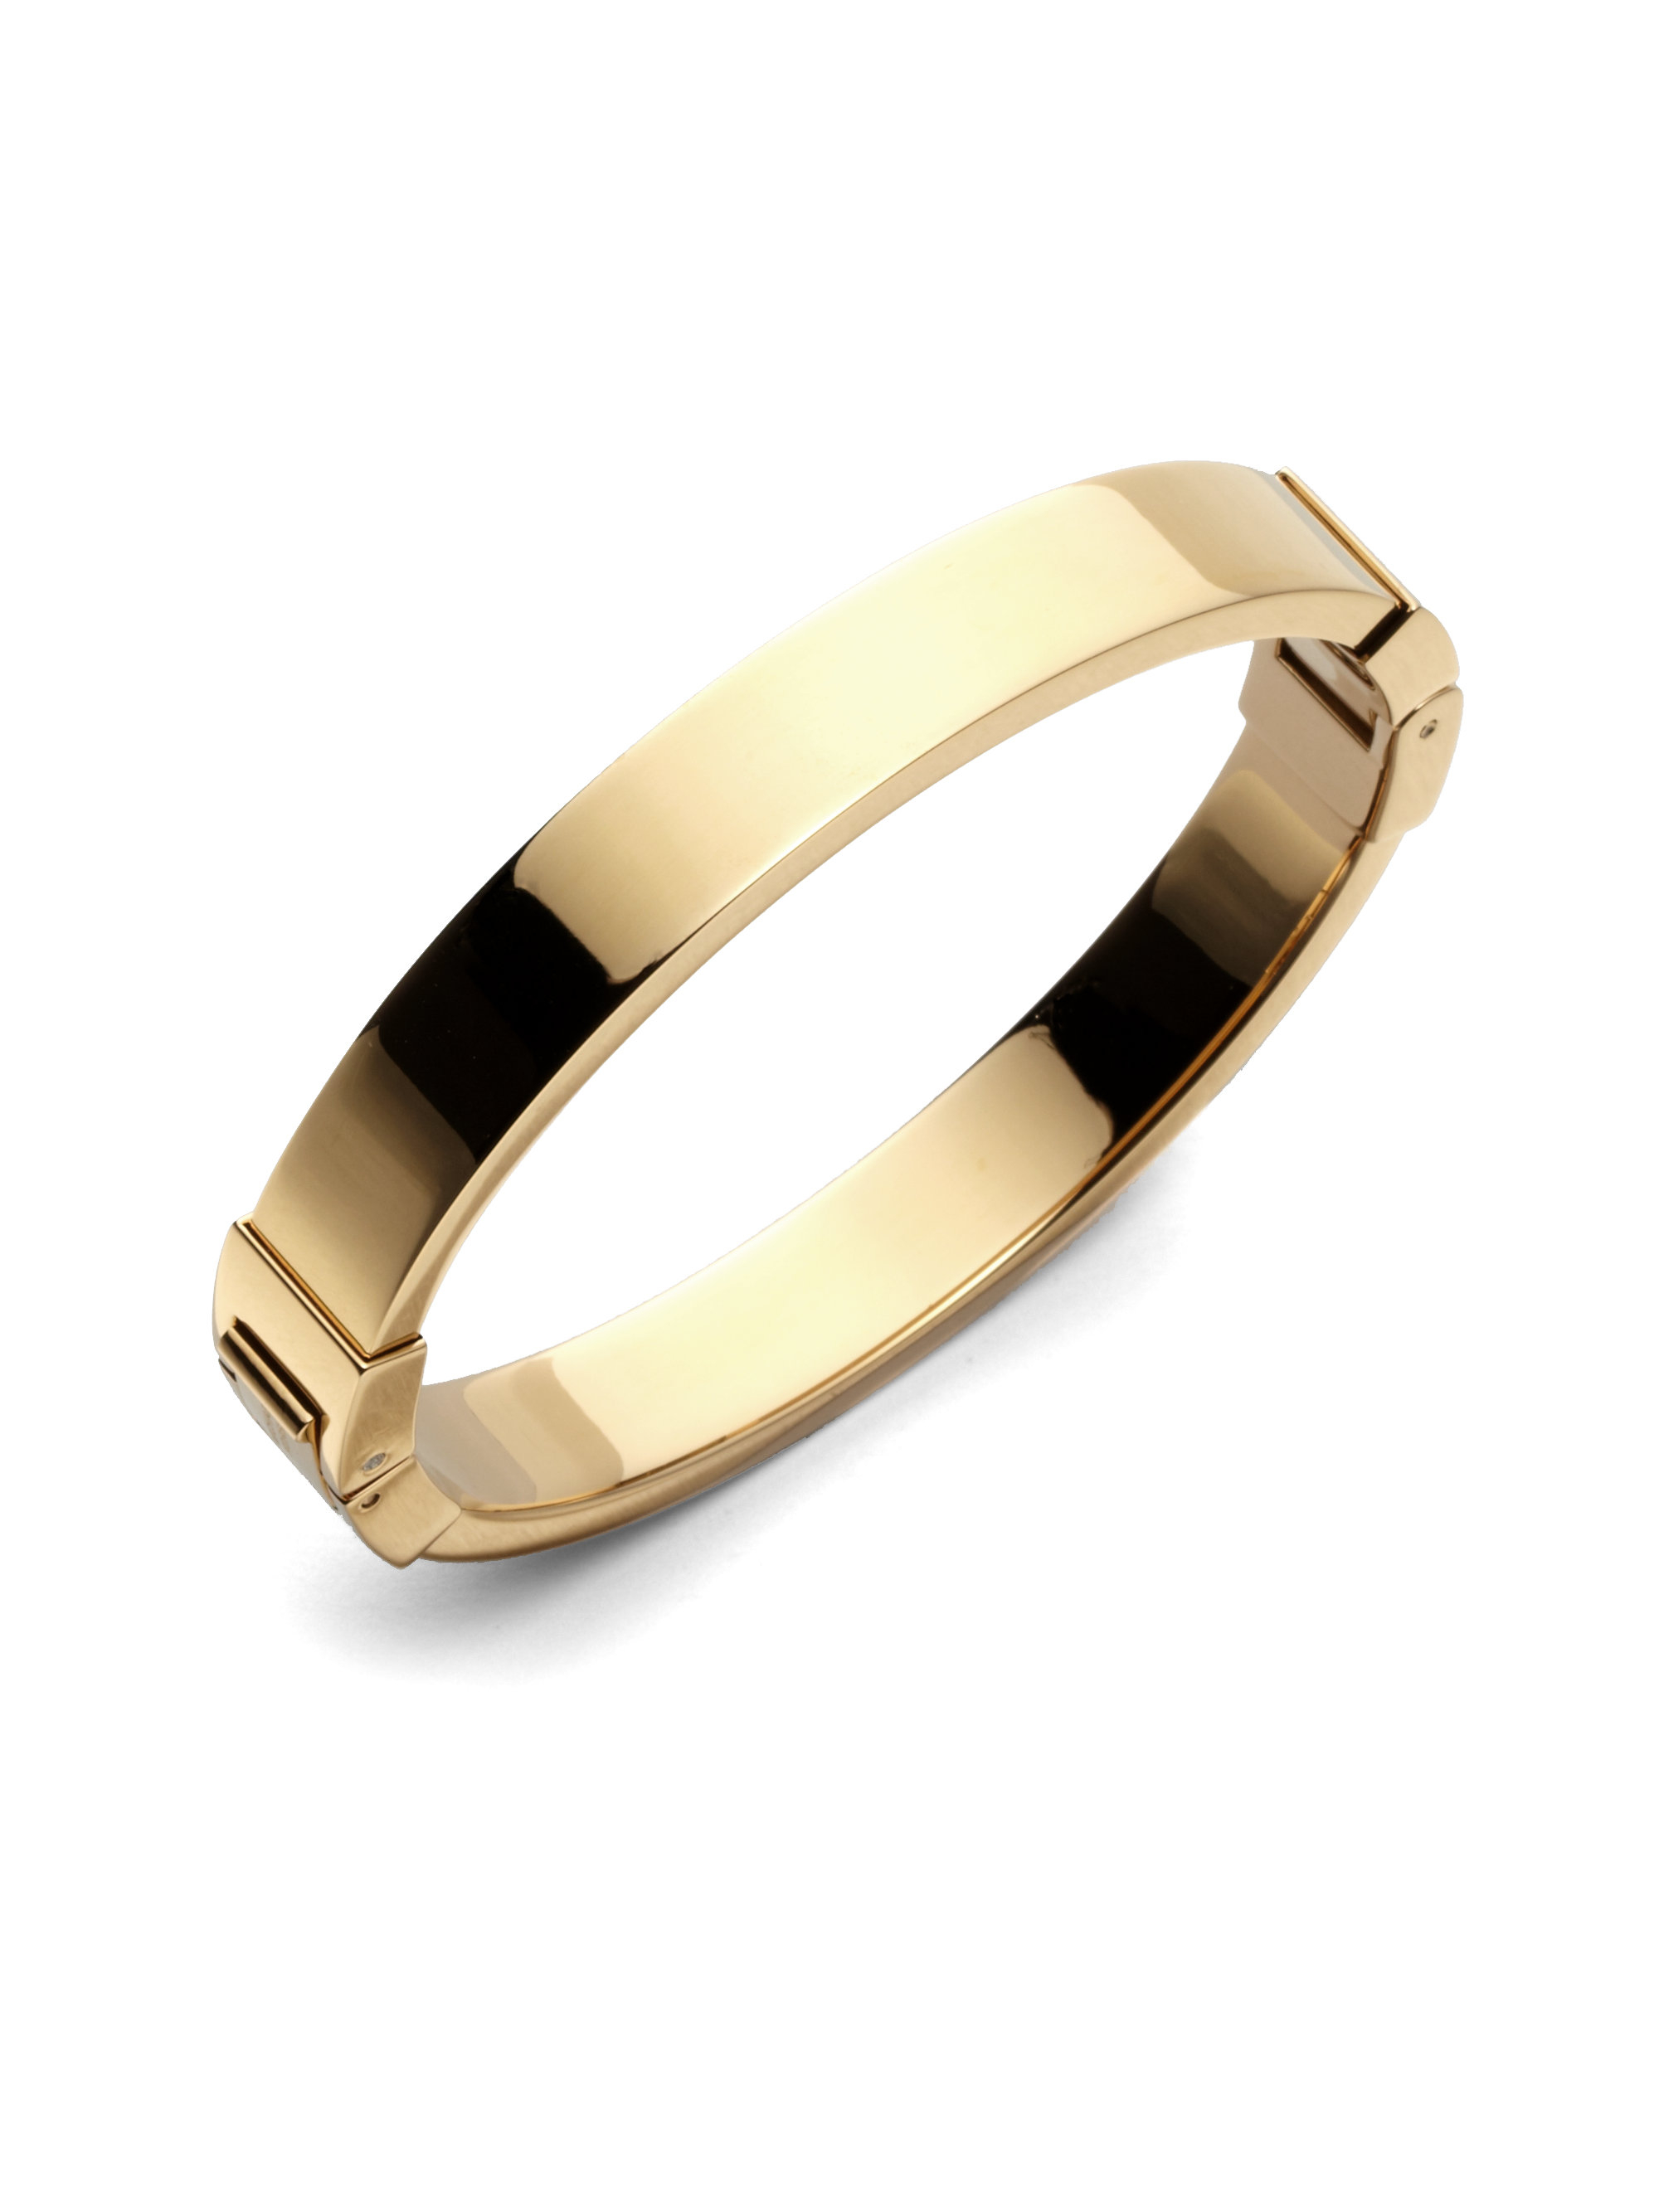 Michael Kors Goldtone Hinged Bangle Bracelet in Gold | Lyst